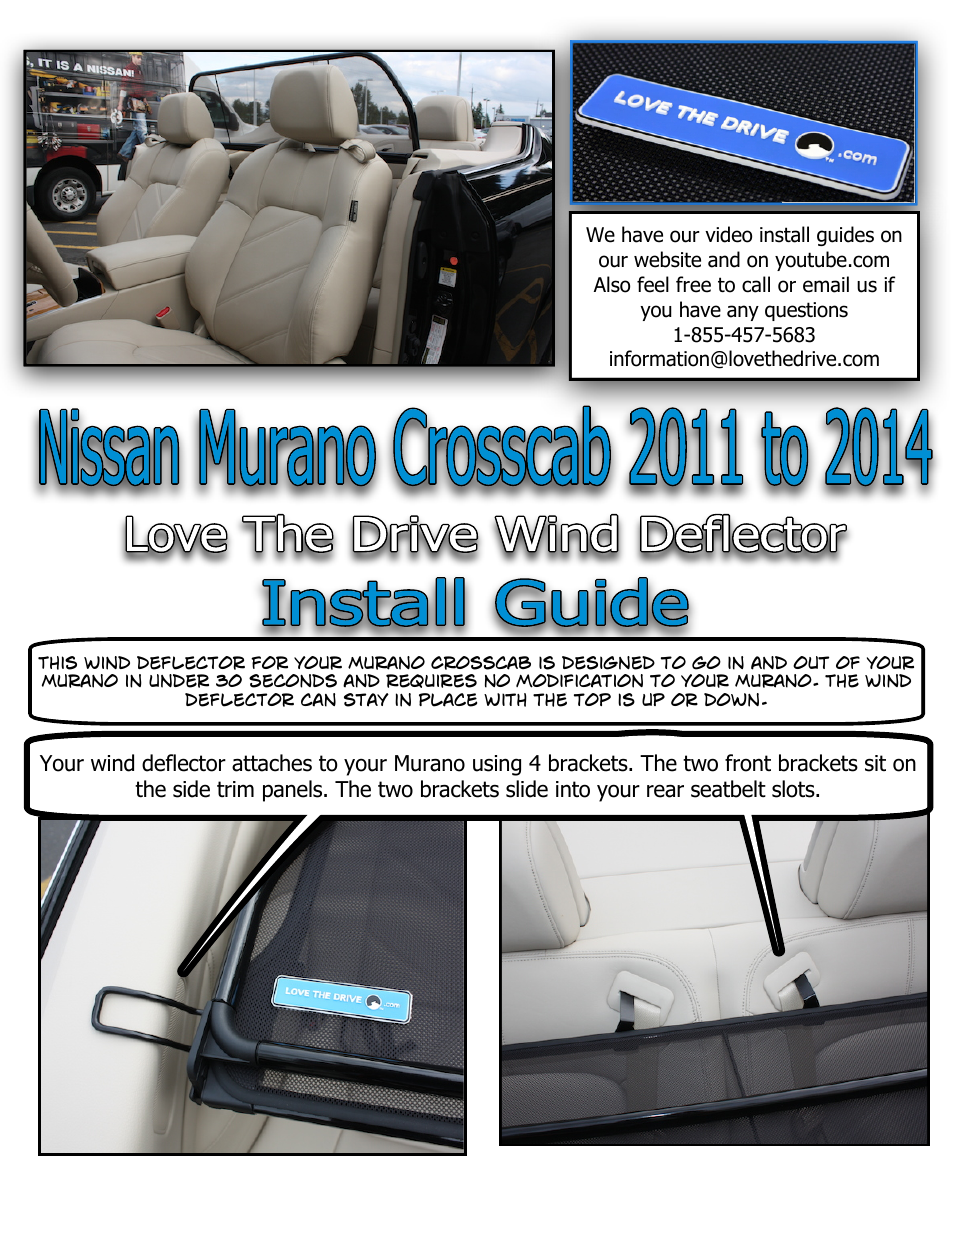 Nissan Murano CrossCabriolet Wind Deflector 2011 to 2014